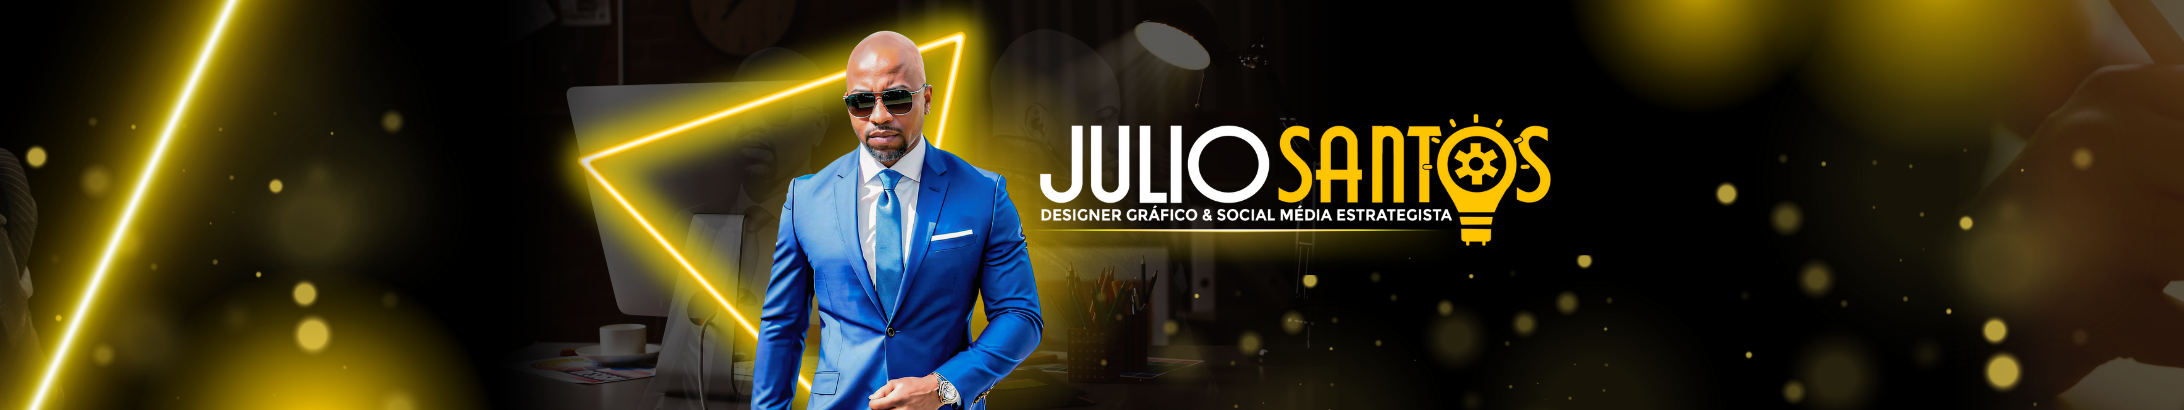 Julio Santos's profile banner